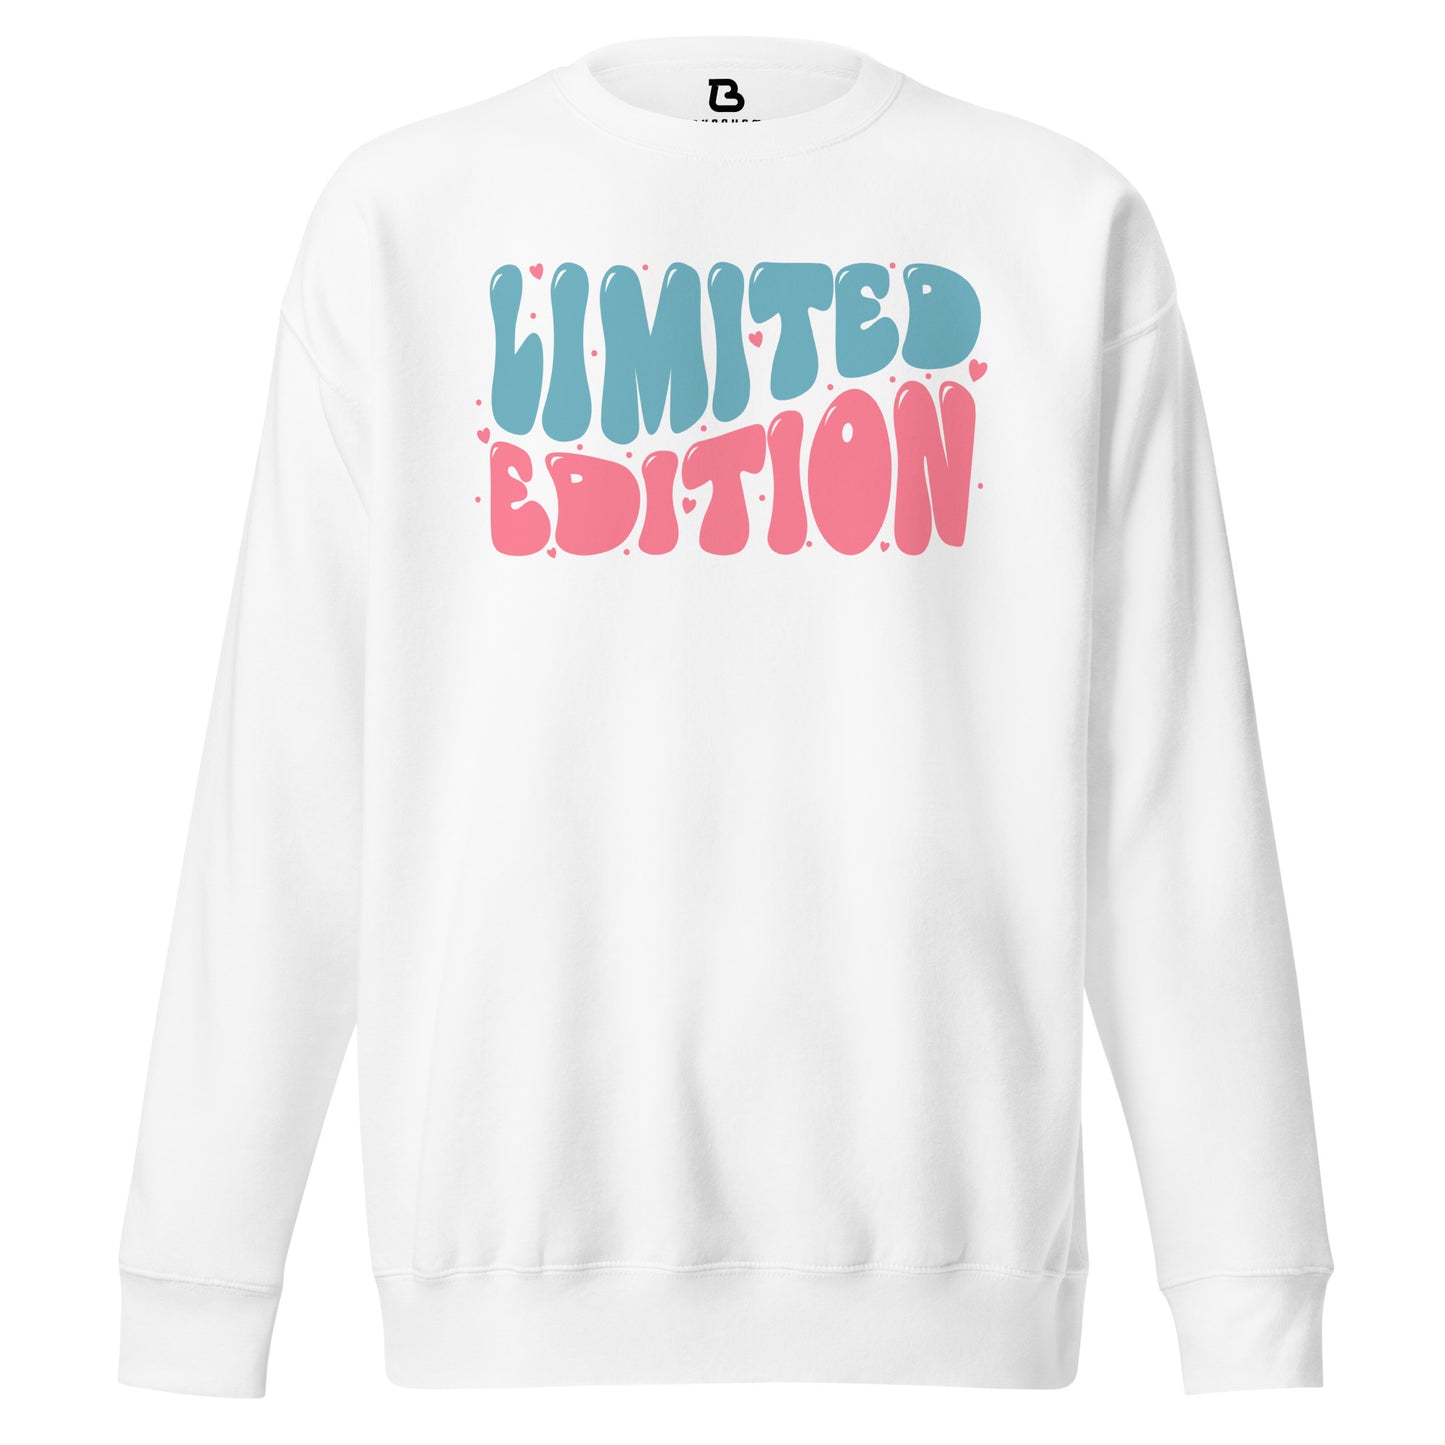 Unisex Premium Sweatshirt - Limited Edition Colored